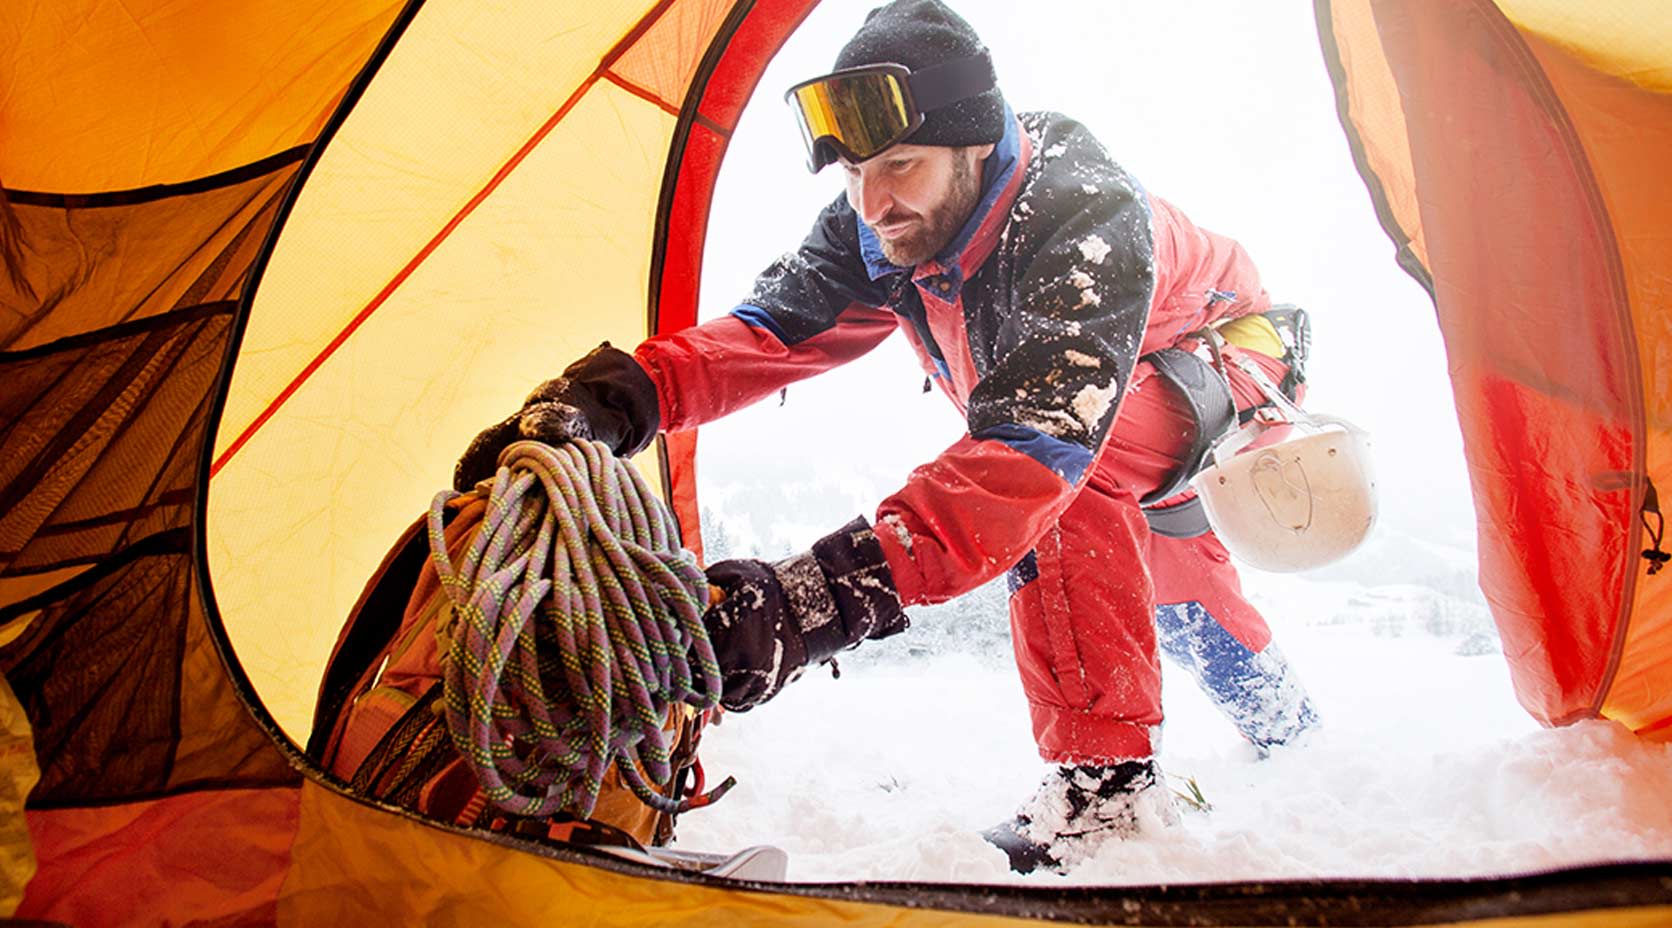 Mann im Schneeanzug holt Ausrüstung aus dem Zelt